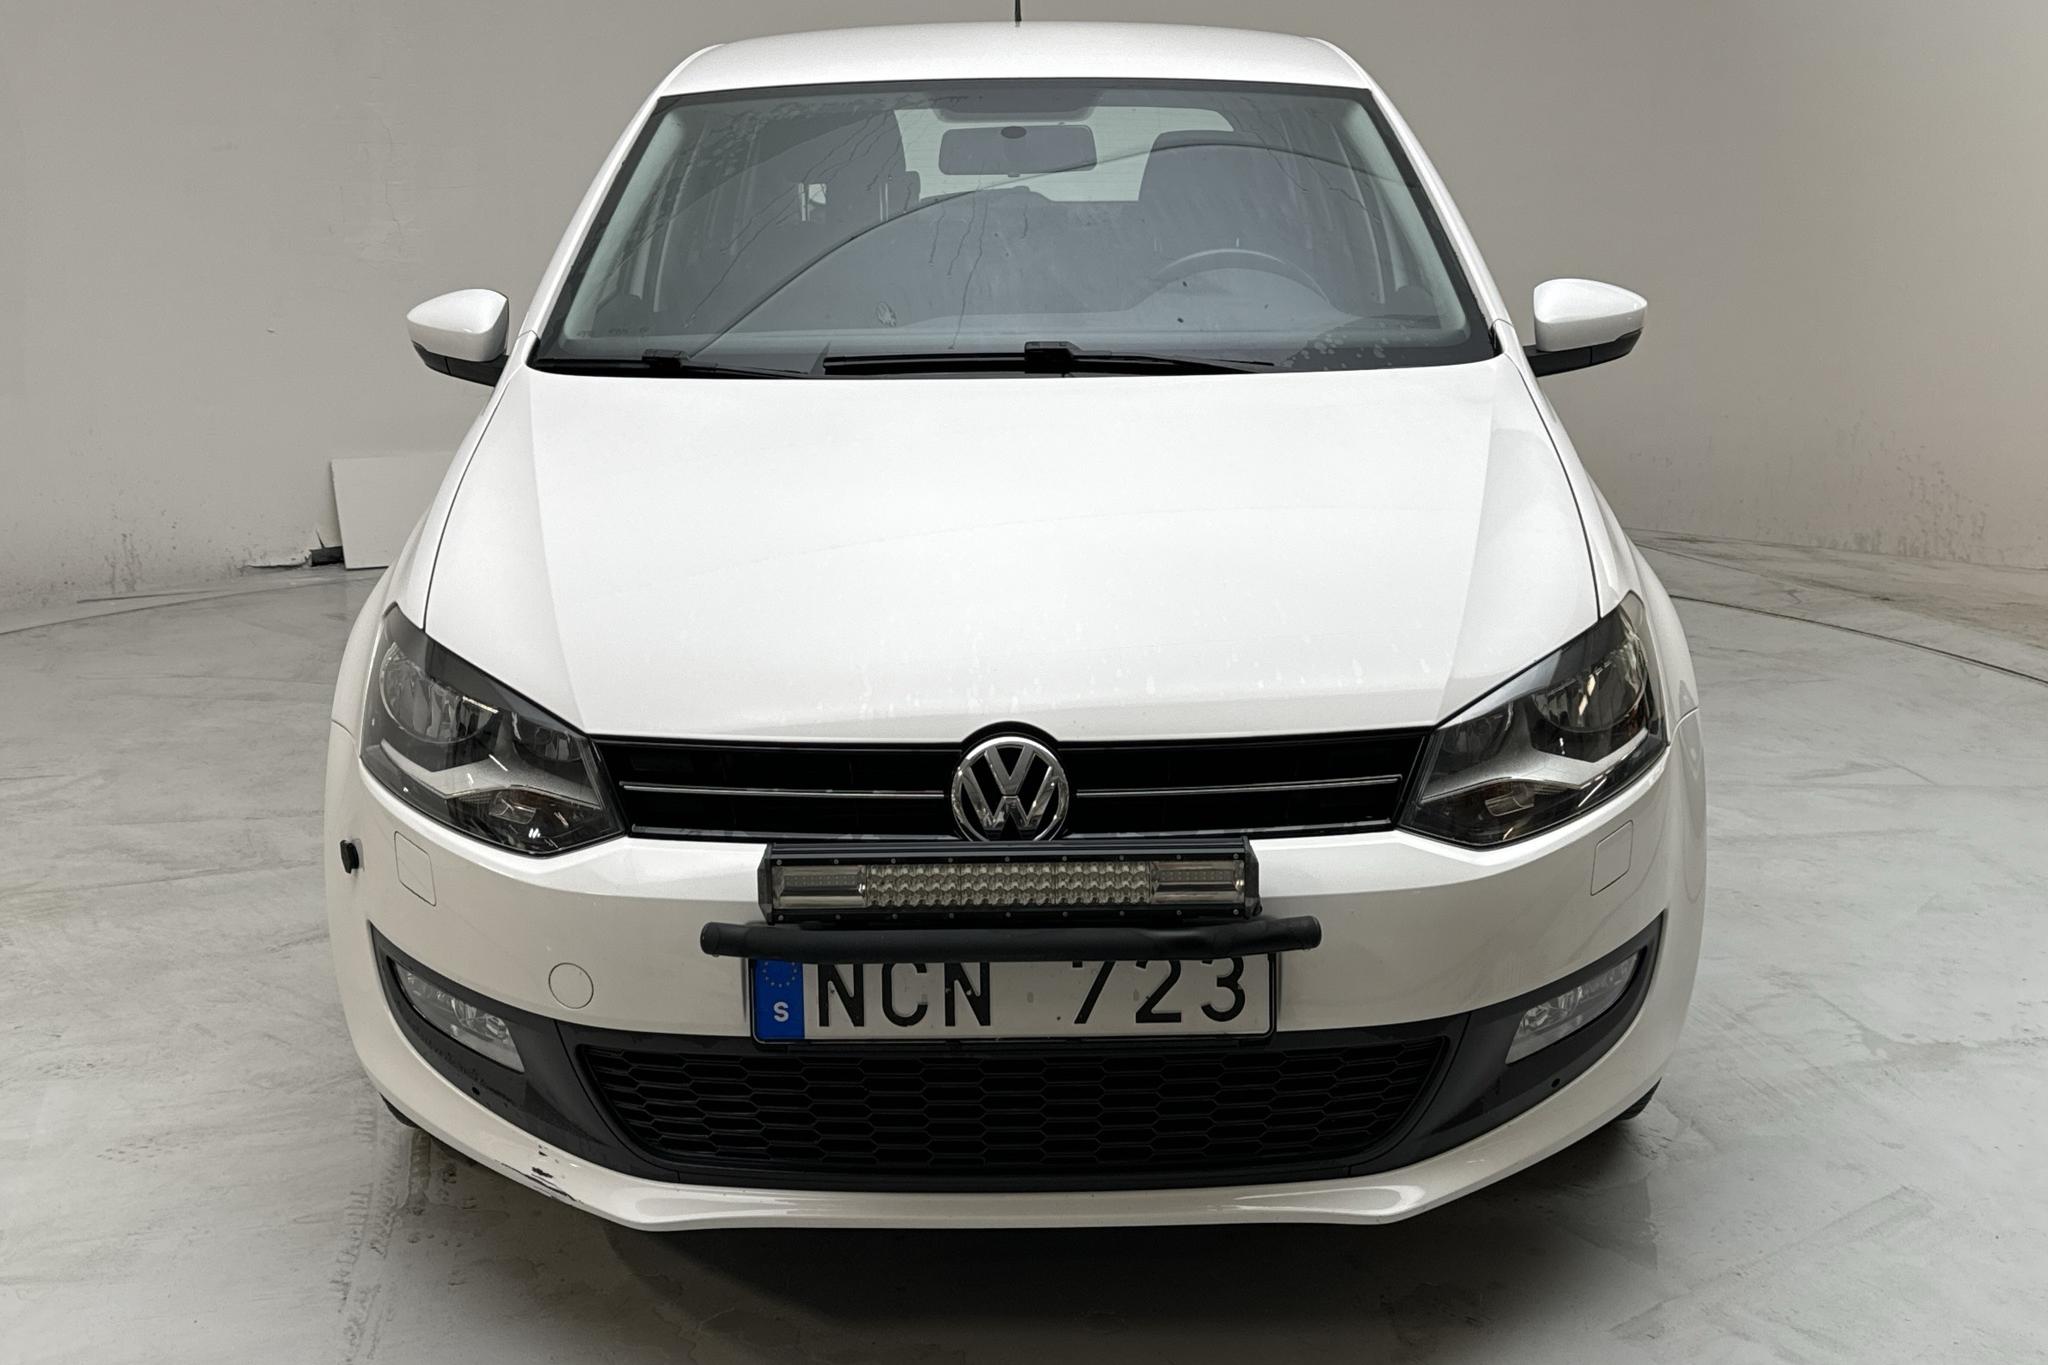 VW Polo 1.2 TSI 5dr (90hk) - 14 227 mil - Manuell - vit - 2013